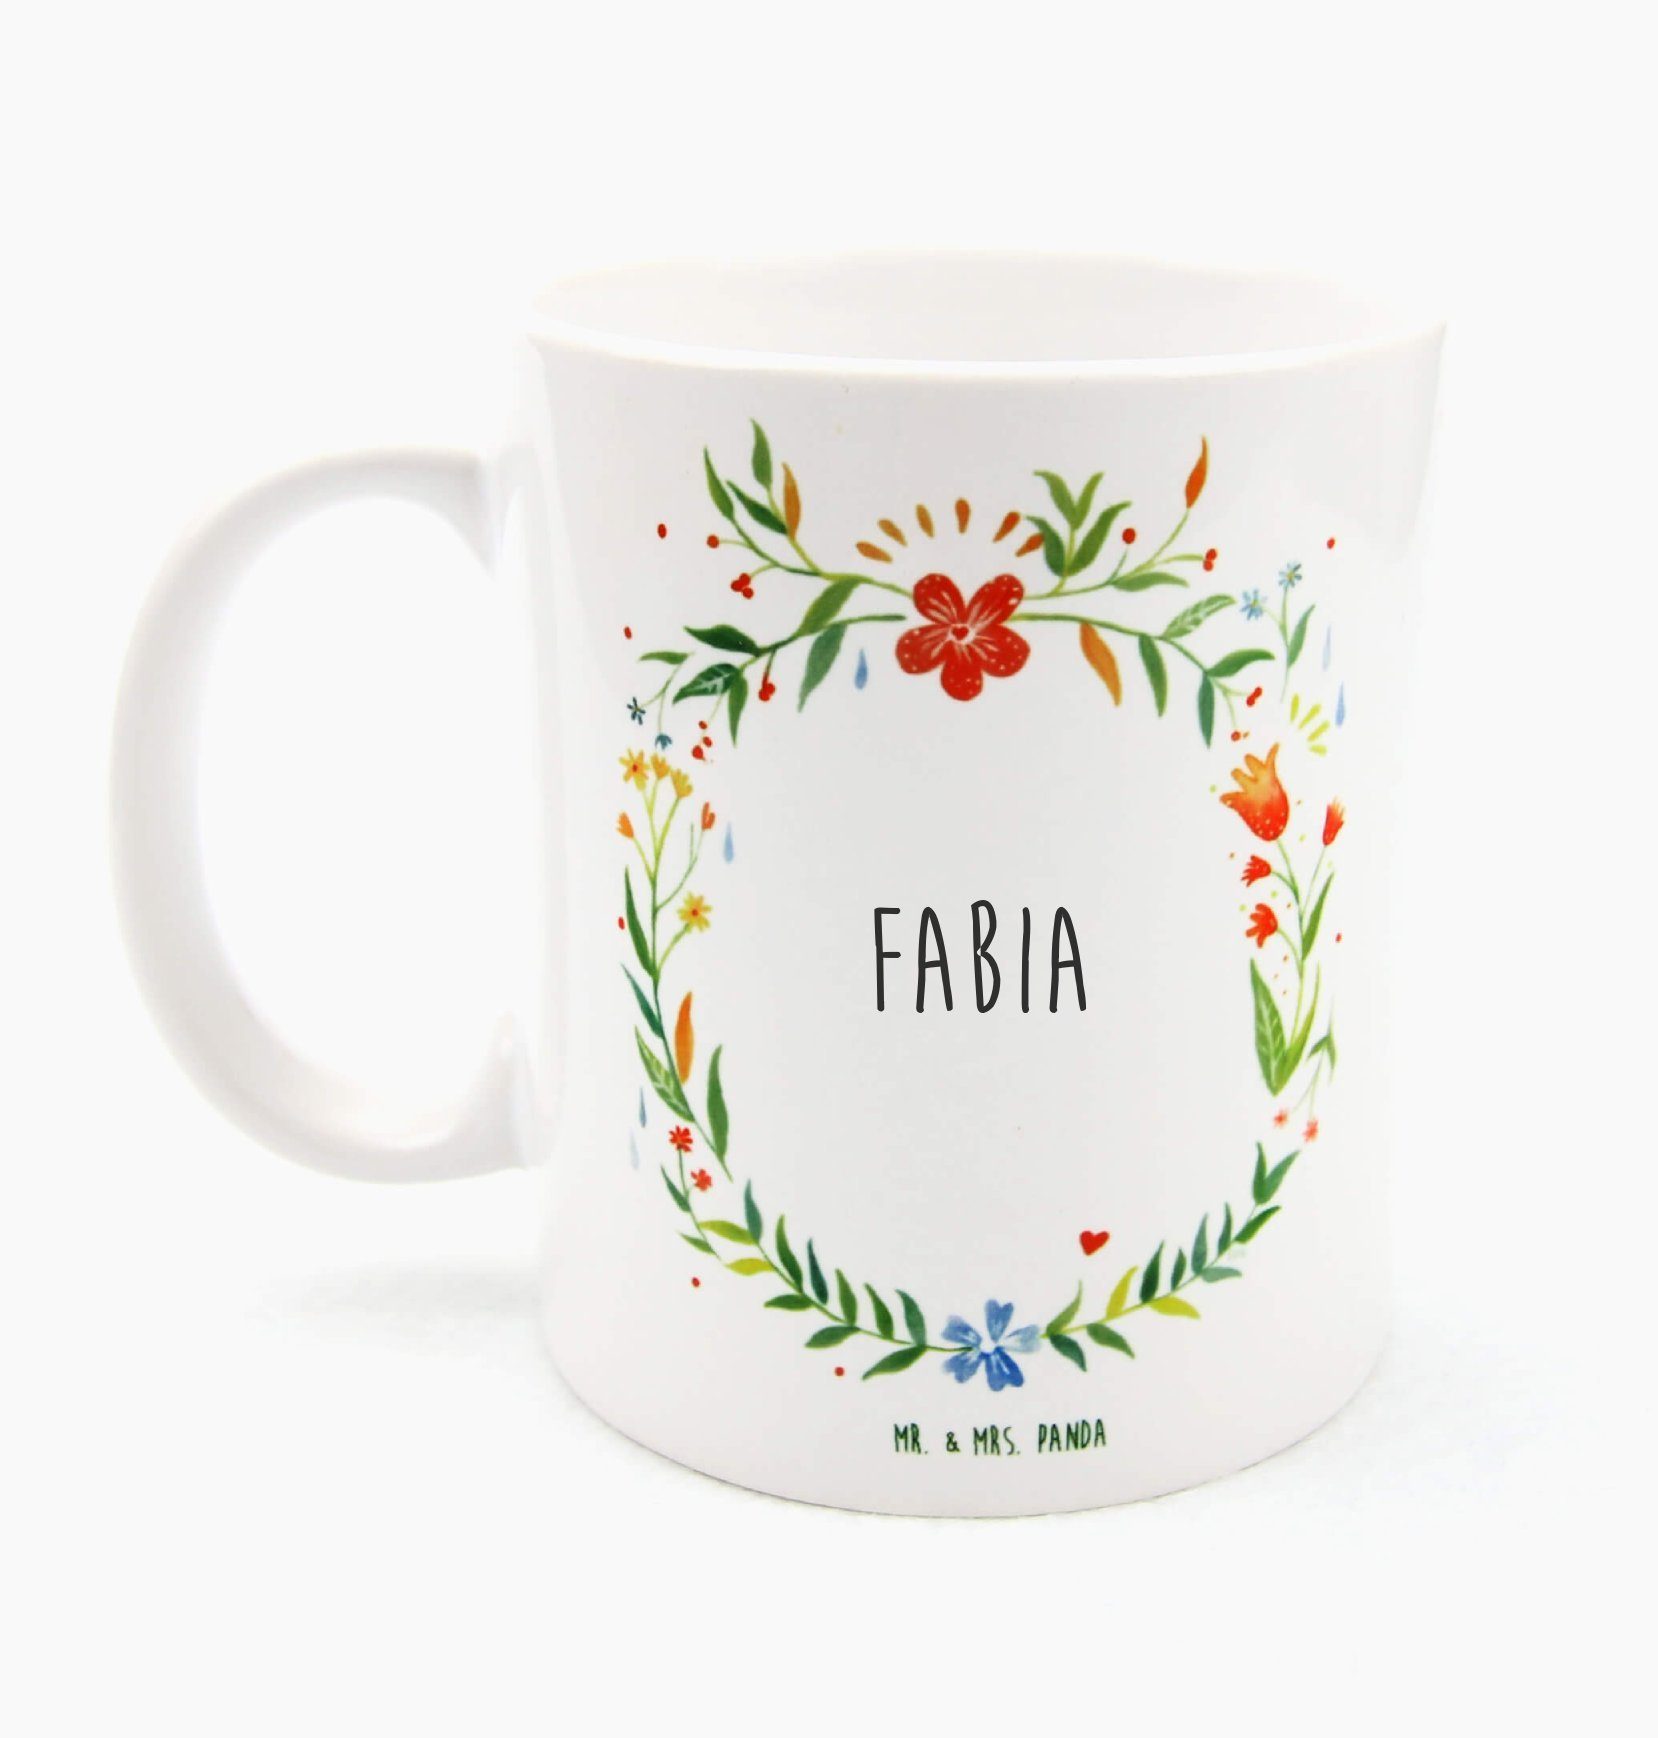 Mr. & Mrs. Panda Tasse Fabia - Geschenk, Büro Tasse, Kaffeetasse, Becher, Keramiktasse, Kaff, Keramik